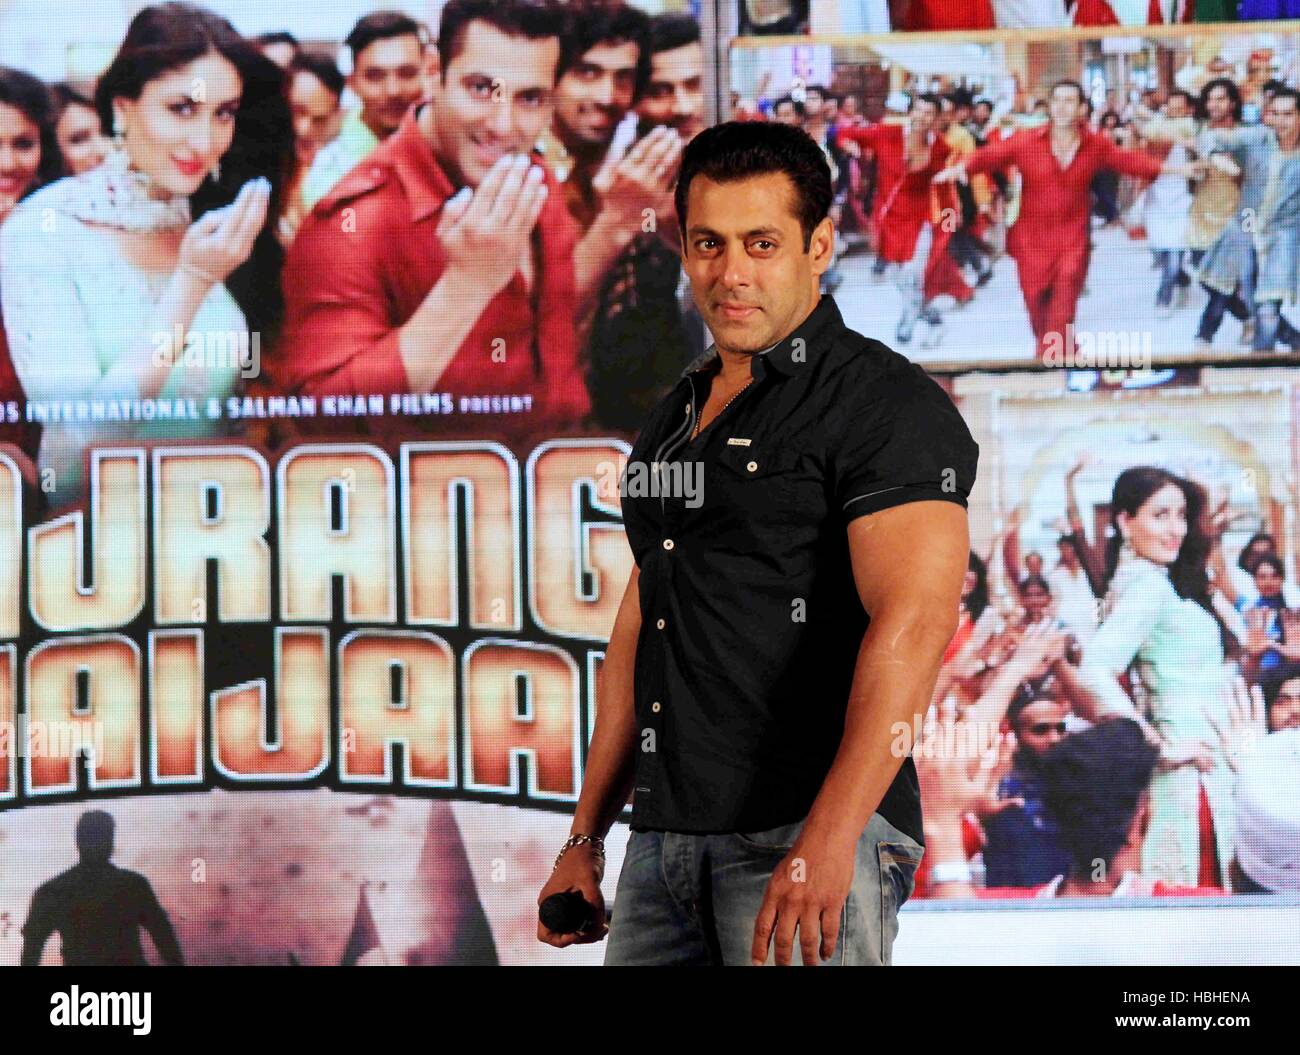 Attore di Bollywood Salman Khan durante il lancio di Eid canzone speciale intitolato Aaj ki parte meri taraf fm Bhaijaan Bajrangi Mumbai Foto Stock